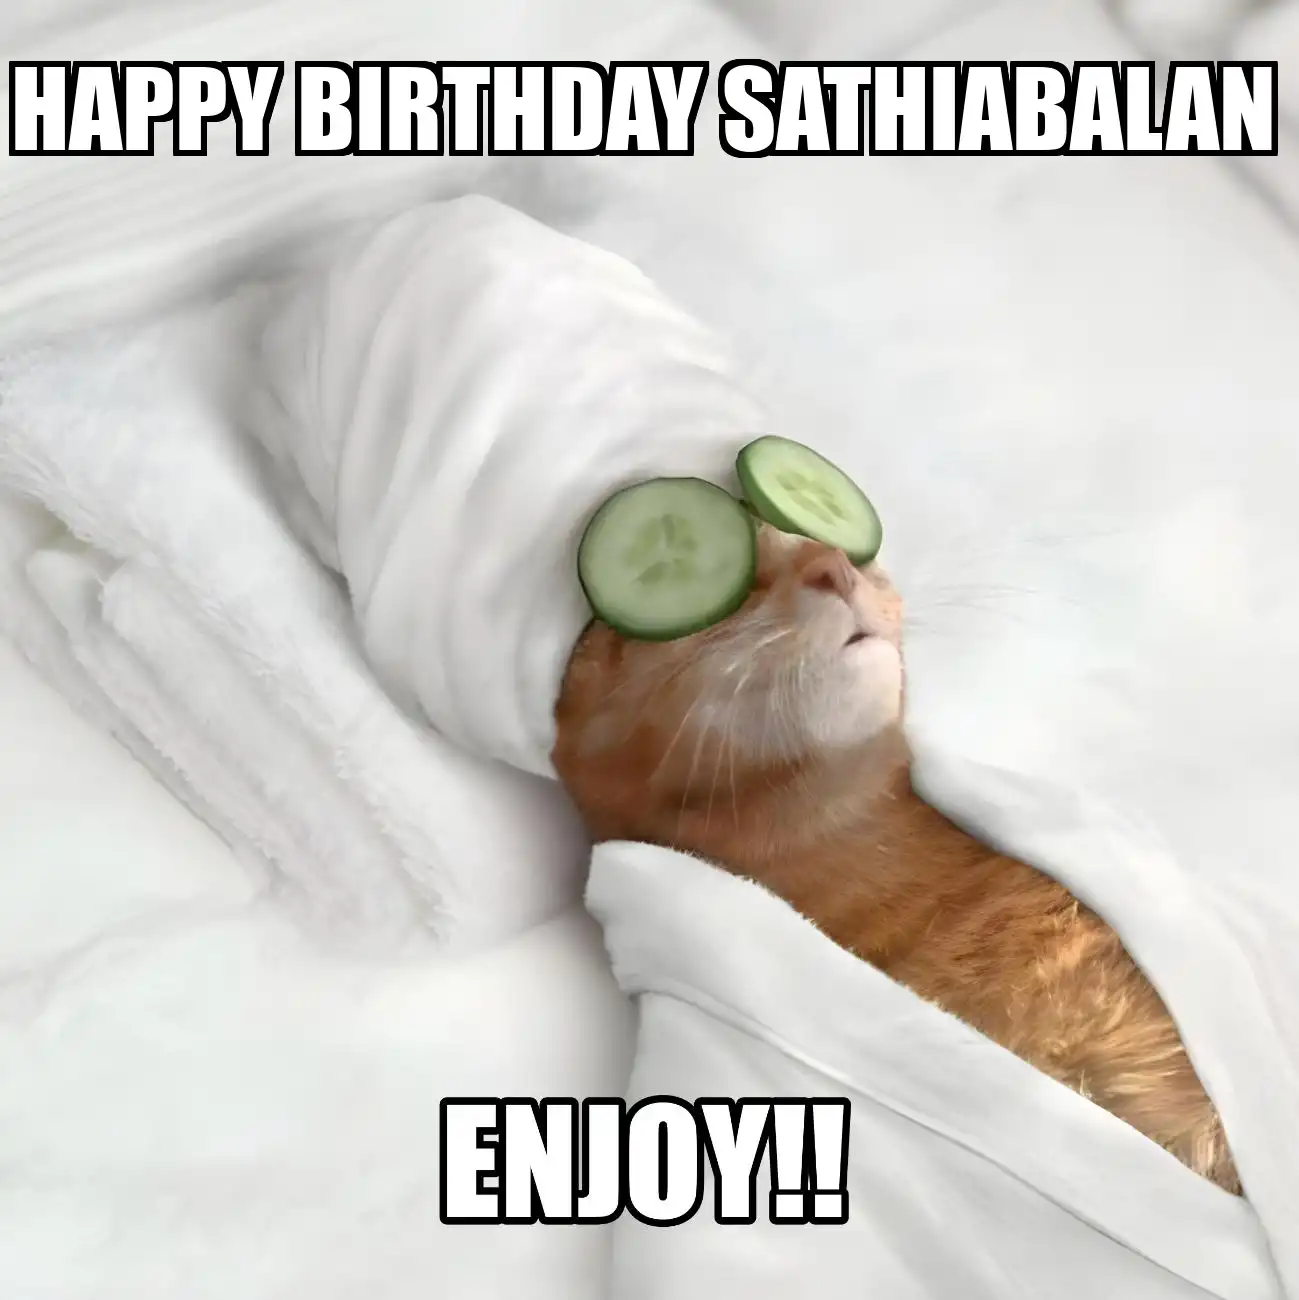 Happy Birthday Sathiabalan Enjoy Cat Meme